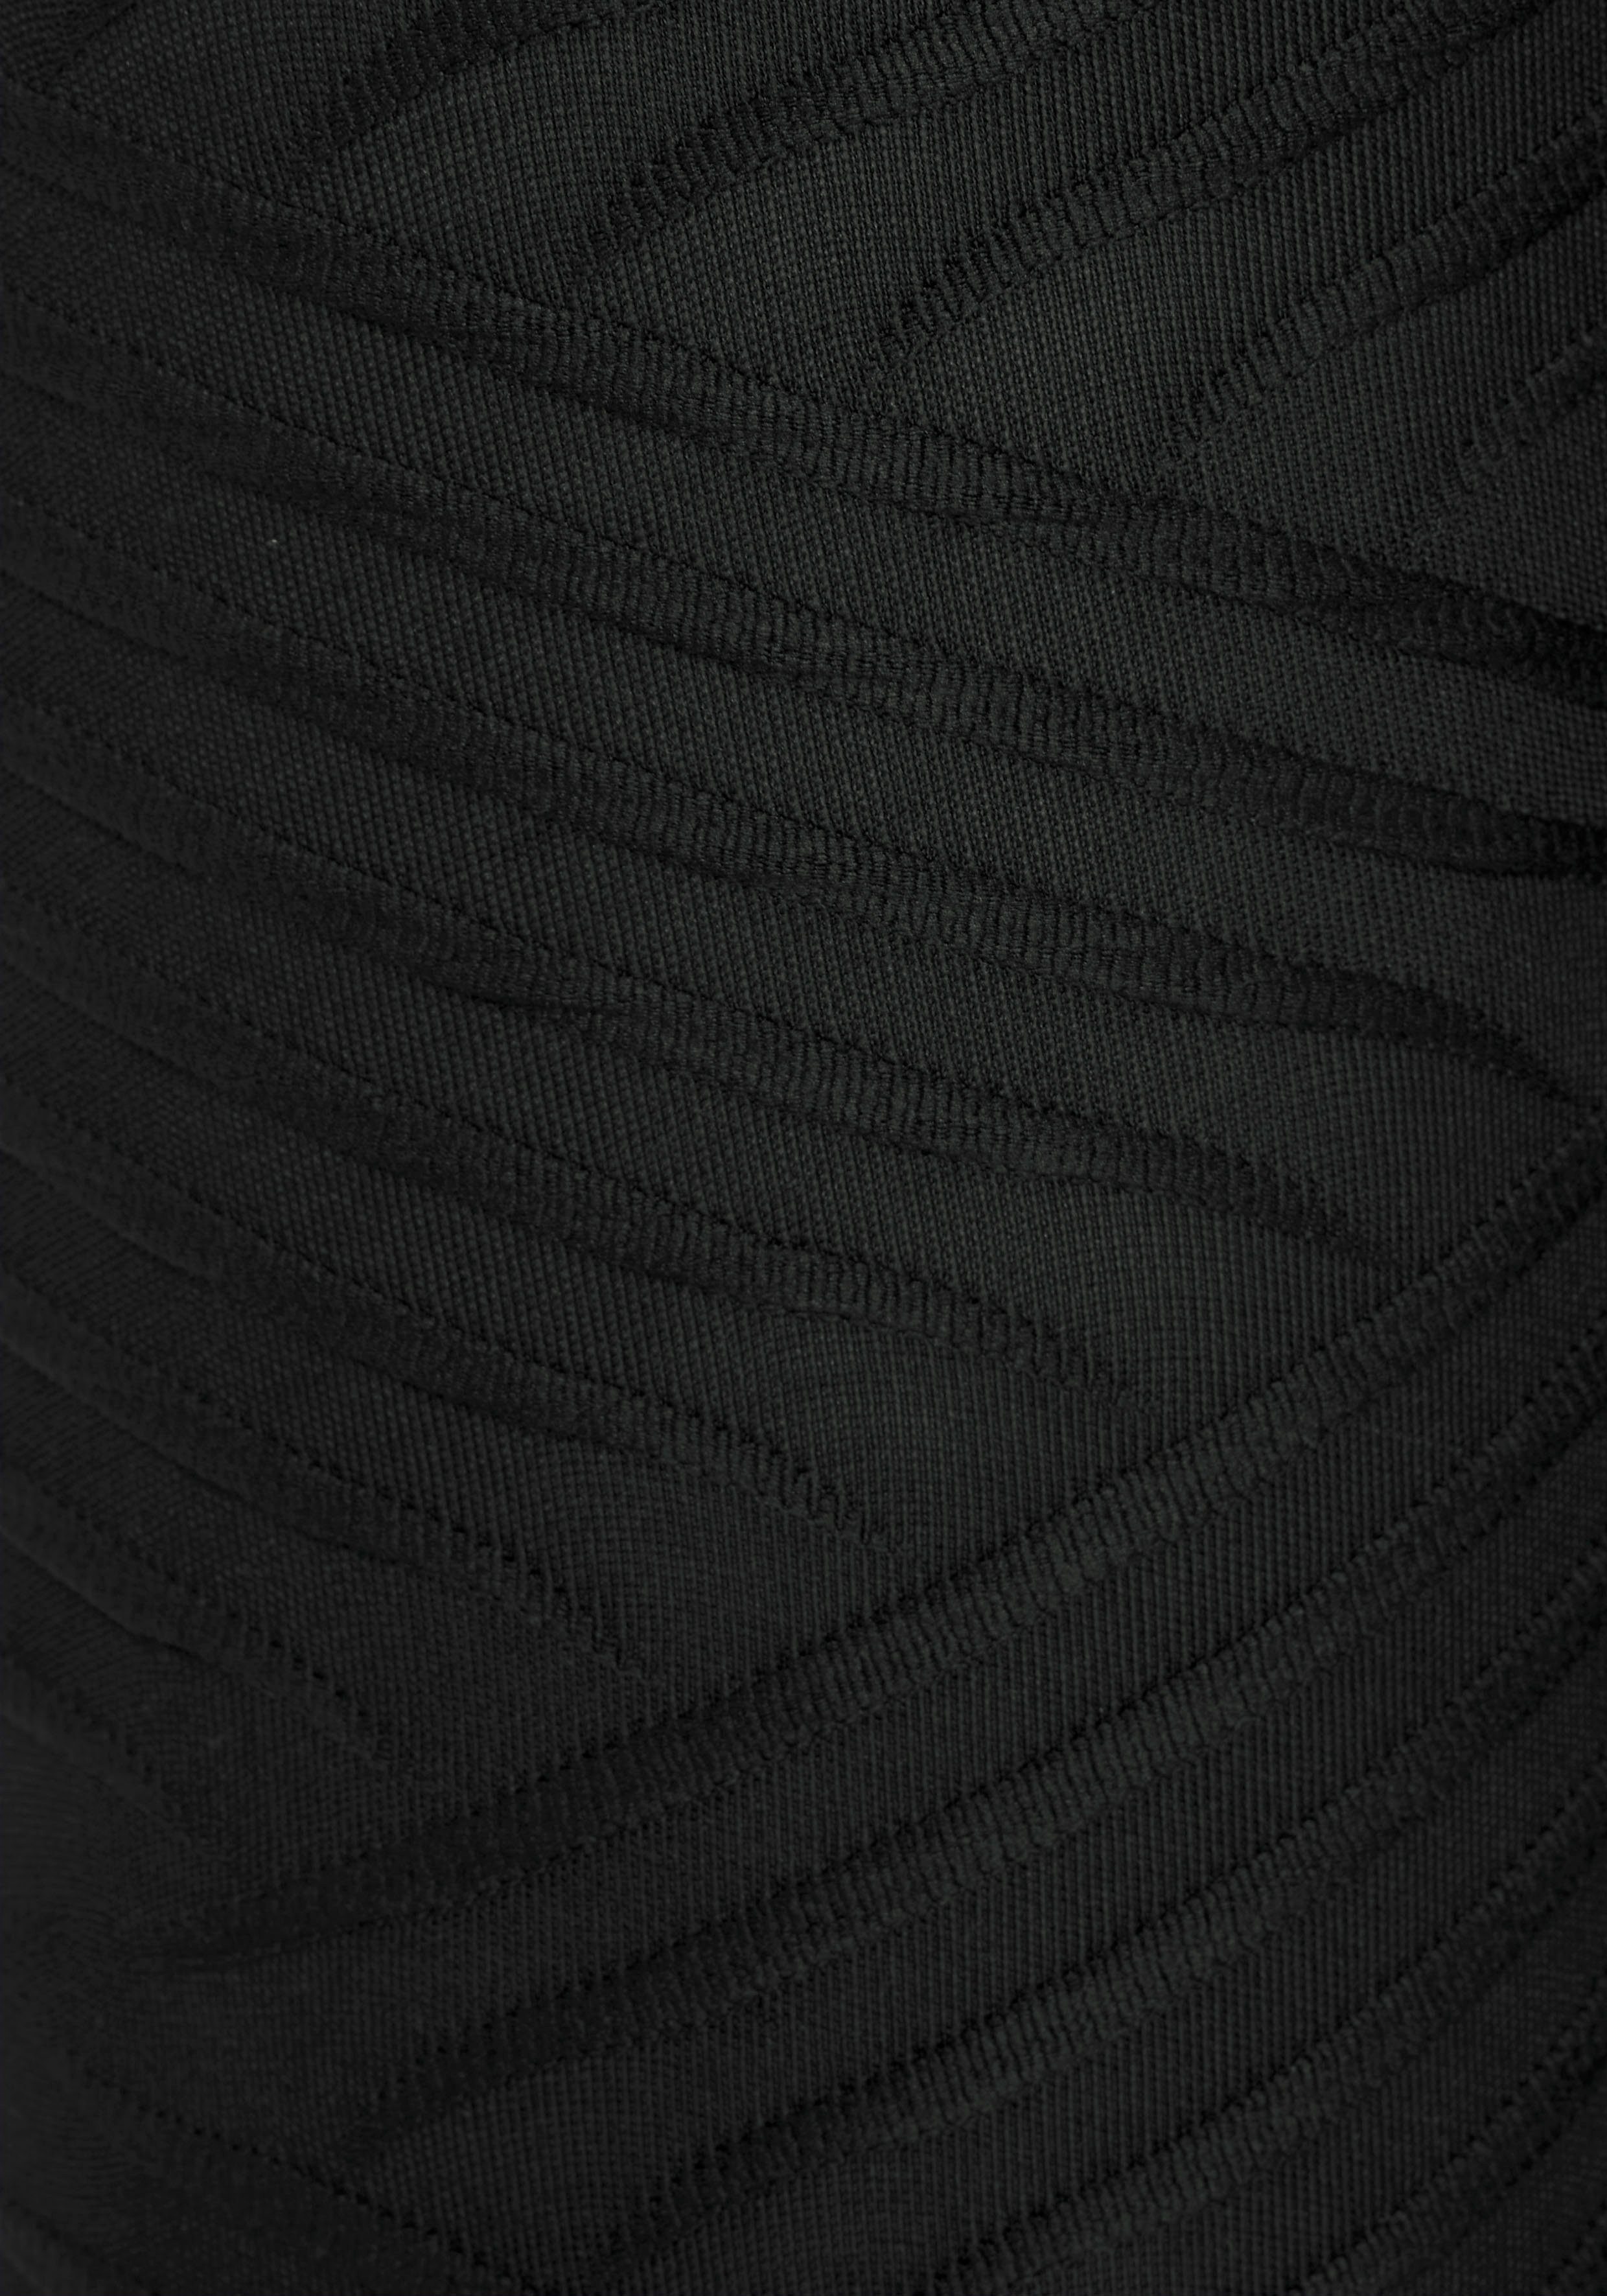 Leggings Loungewear mit ACTIVE -Sportleggings 3D-Struktur, LASCANA schwarz